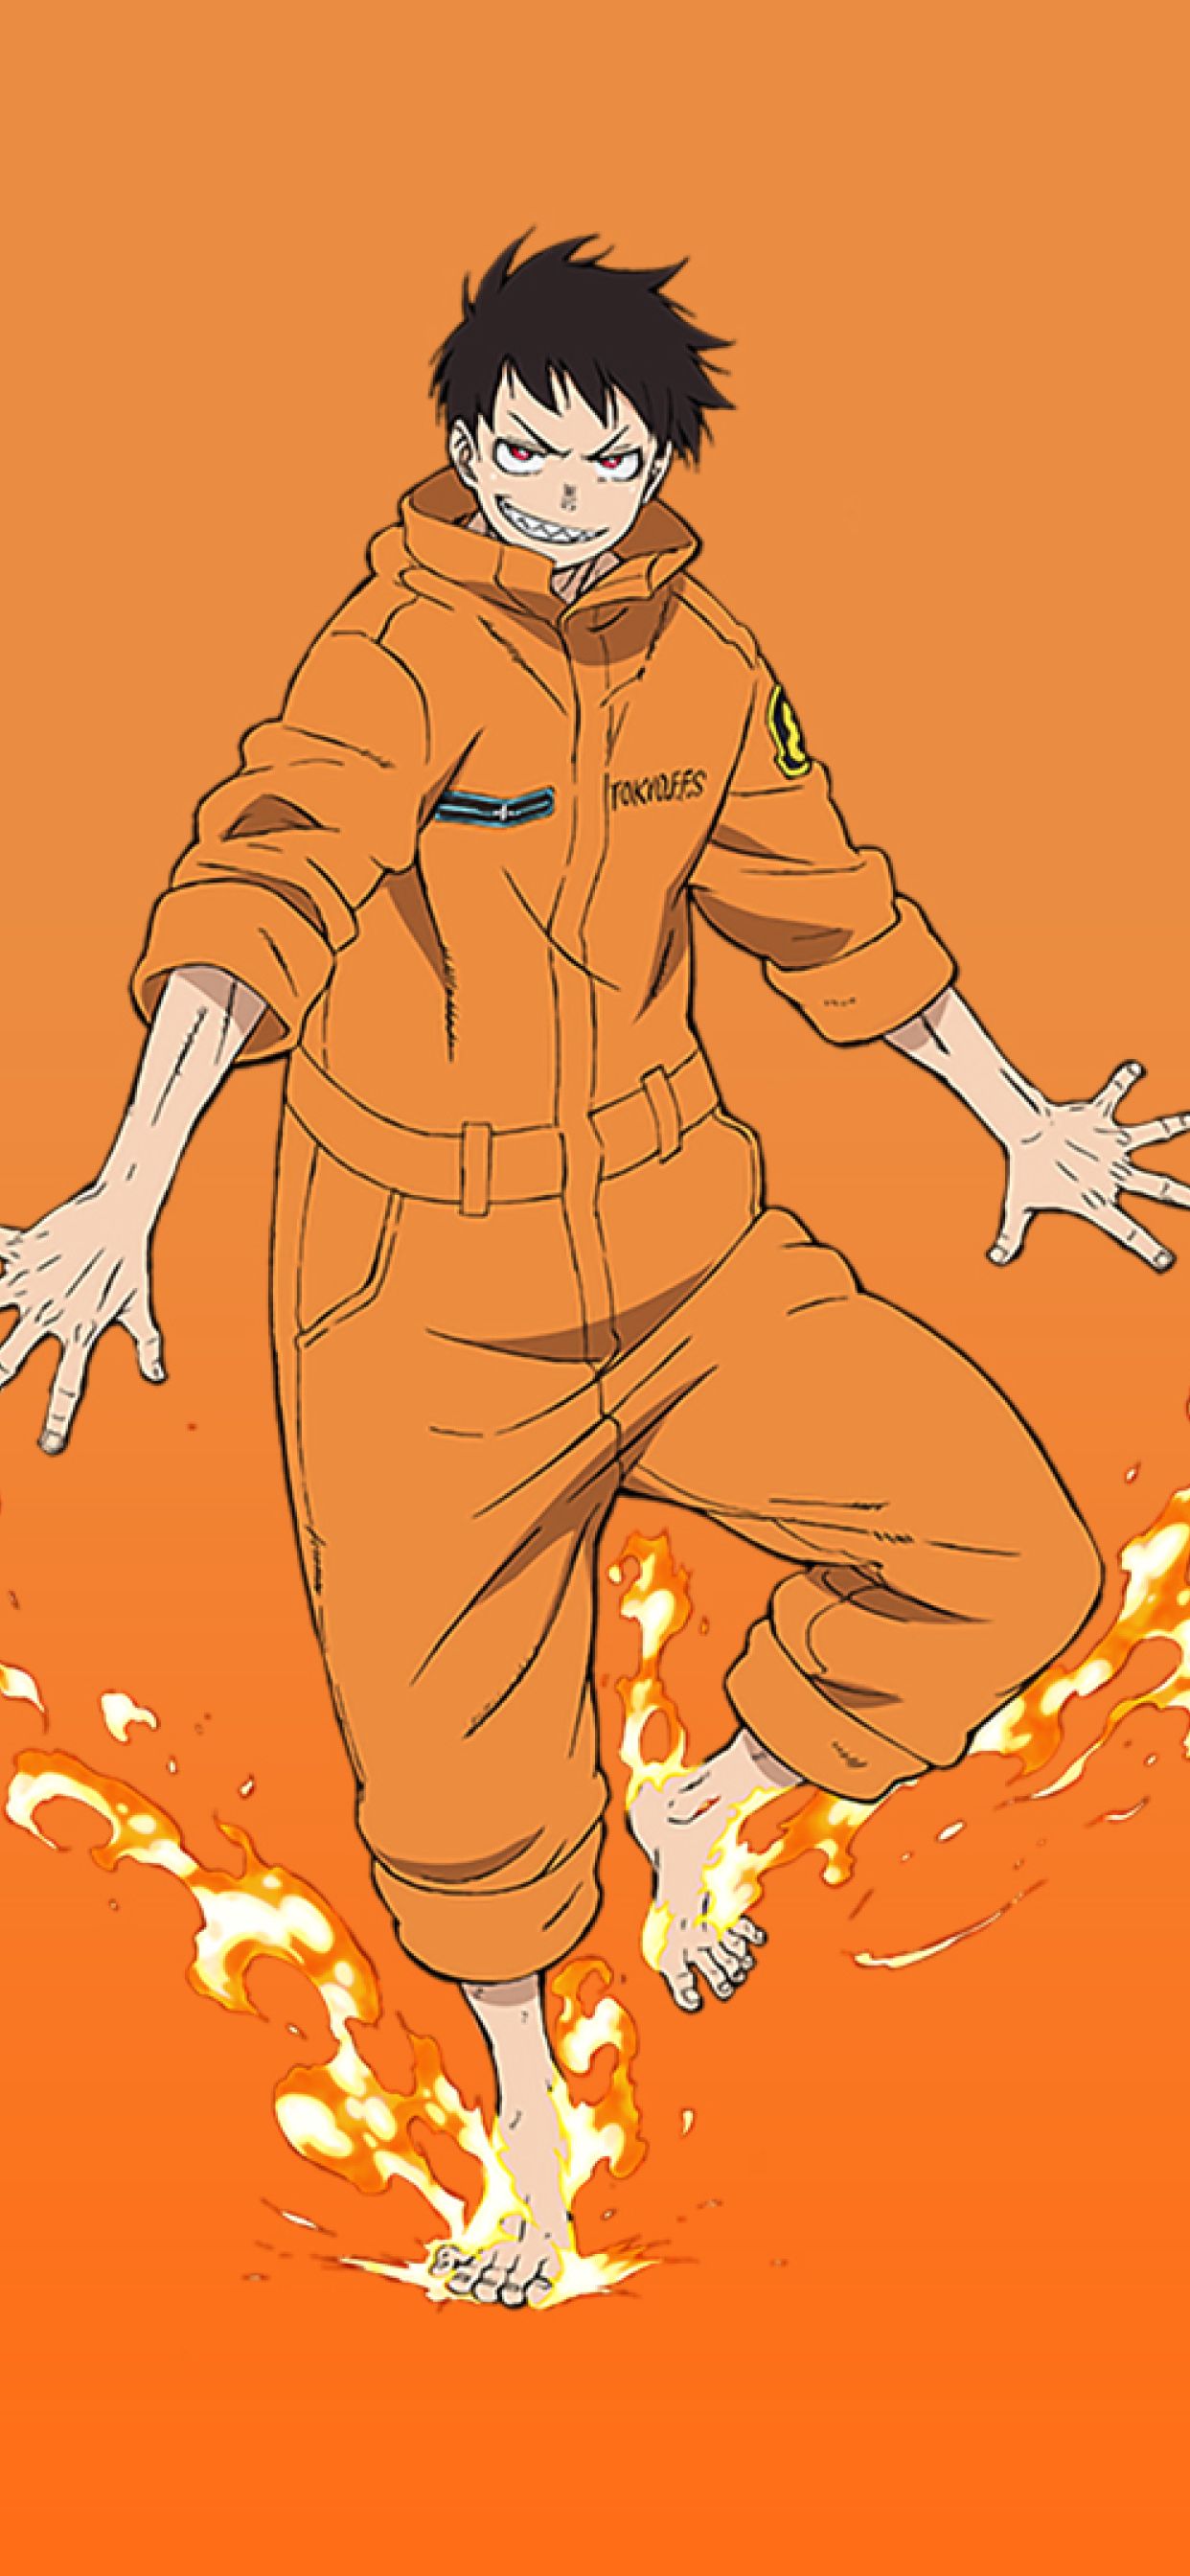 Wallpaper ID 389052  Anime Fire Force Phone Wallpaper Shinra Kusakabe  1080x1920 free download